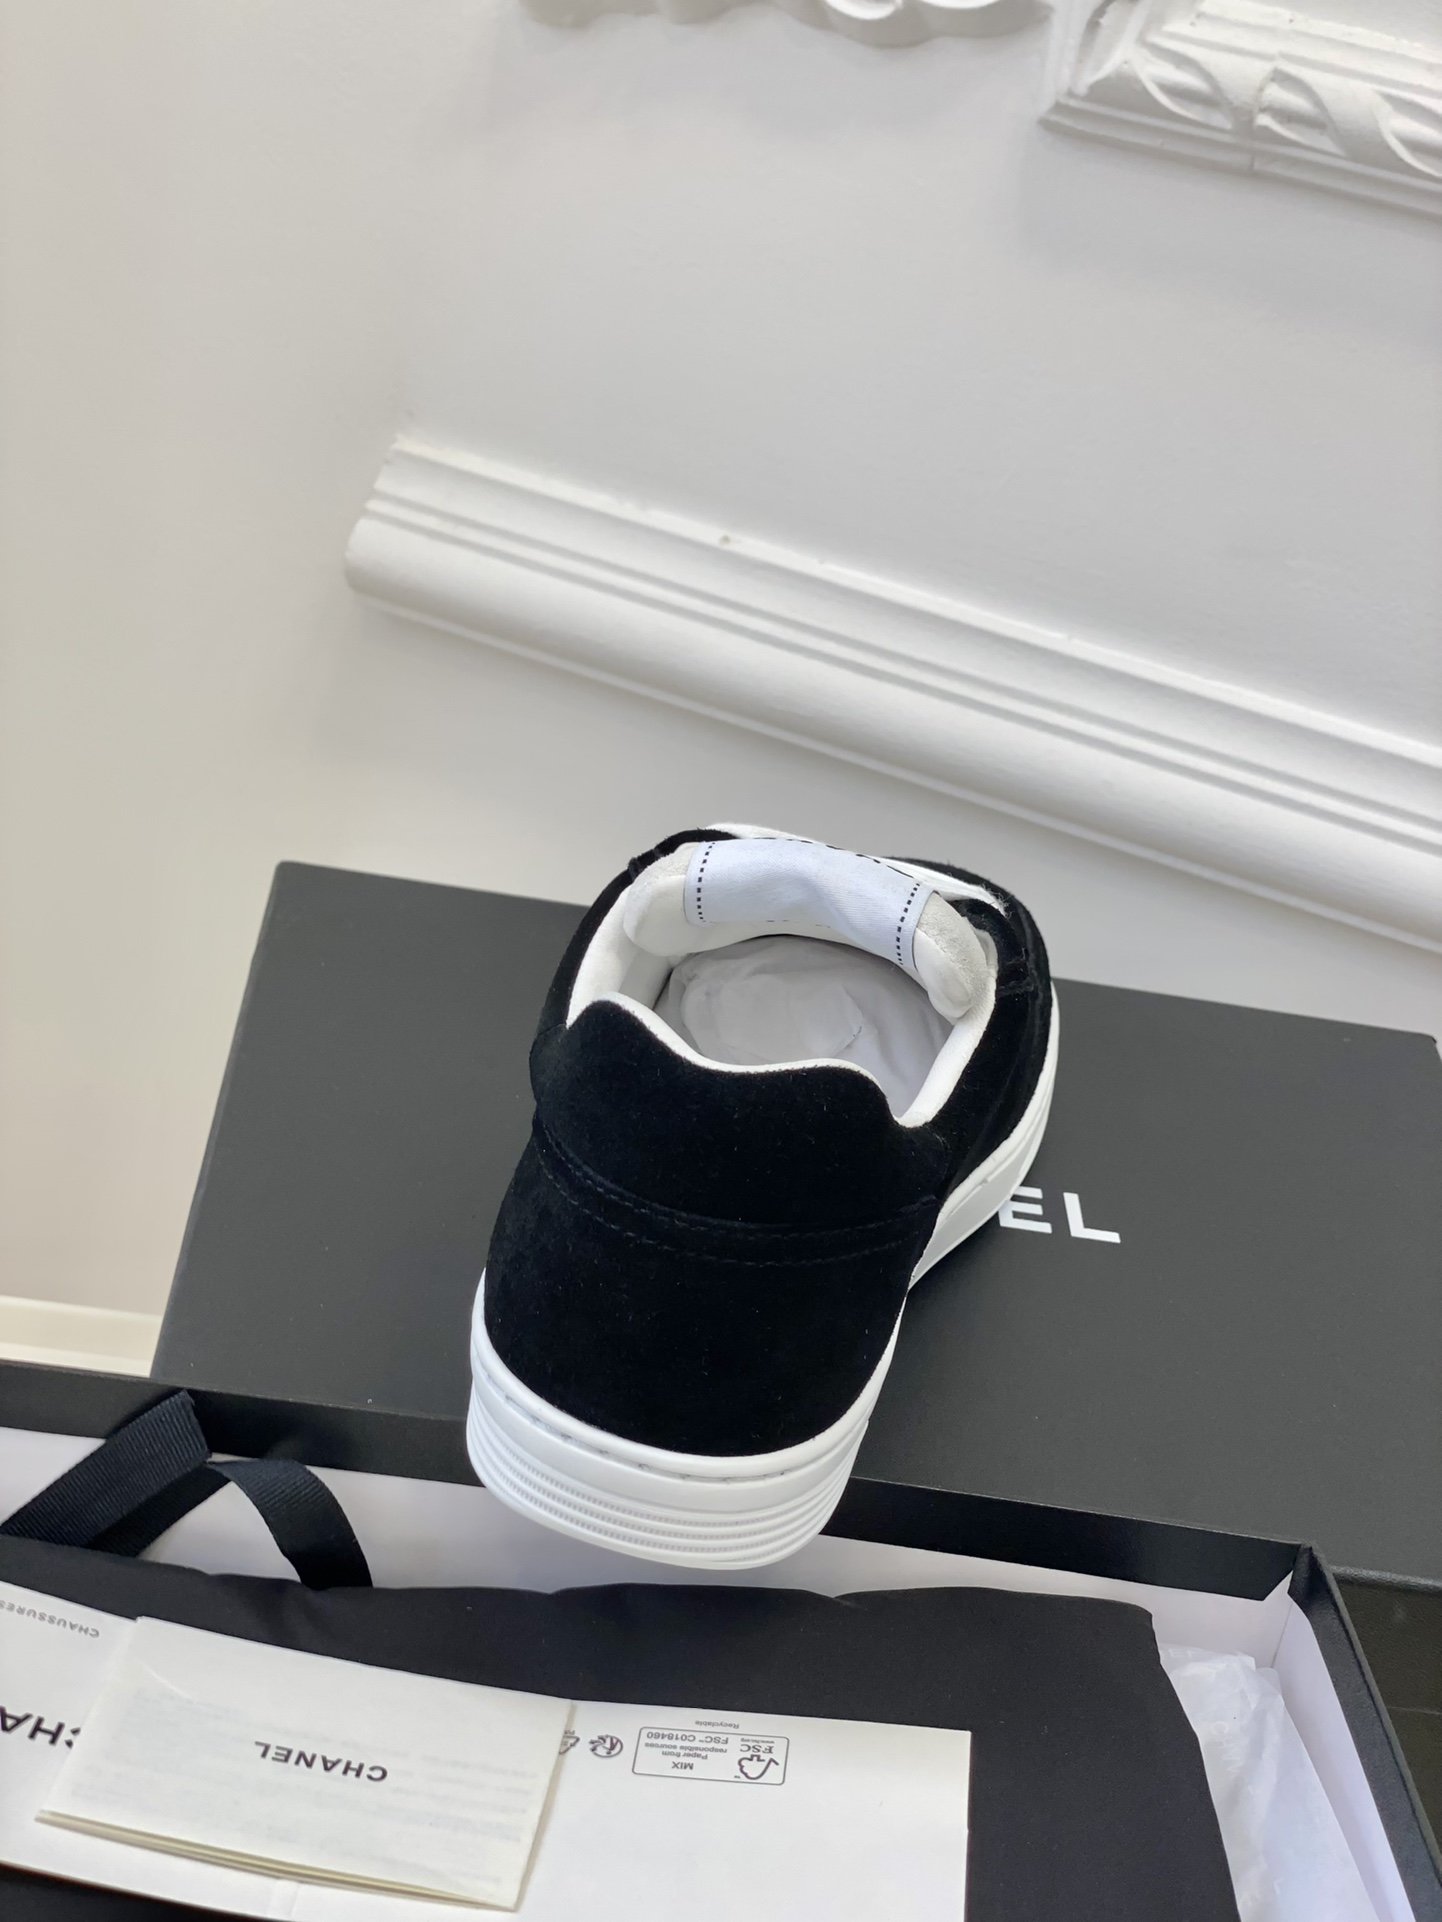 Chanel新款熊猫板鞋休闲鞋这款百